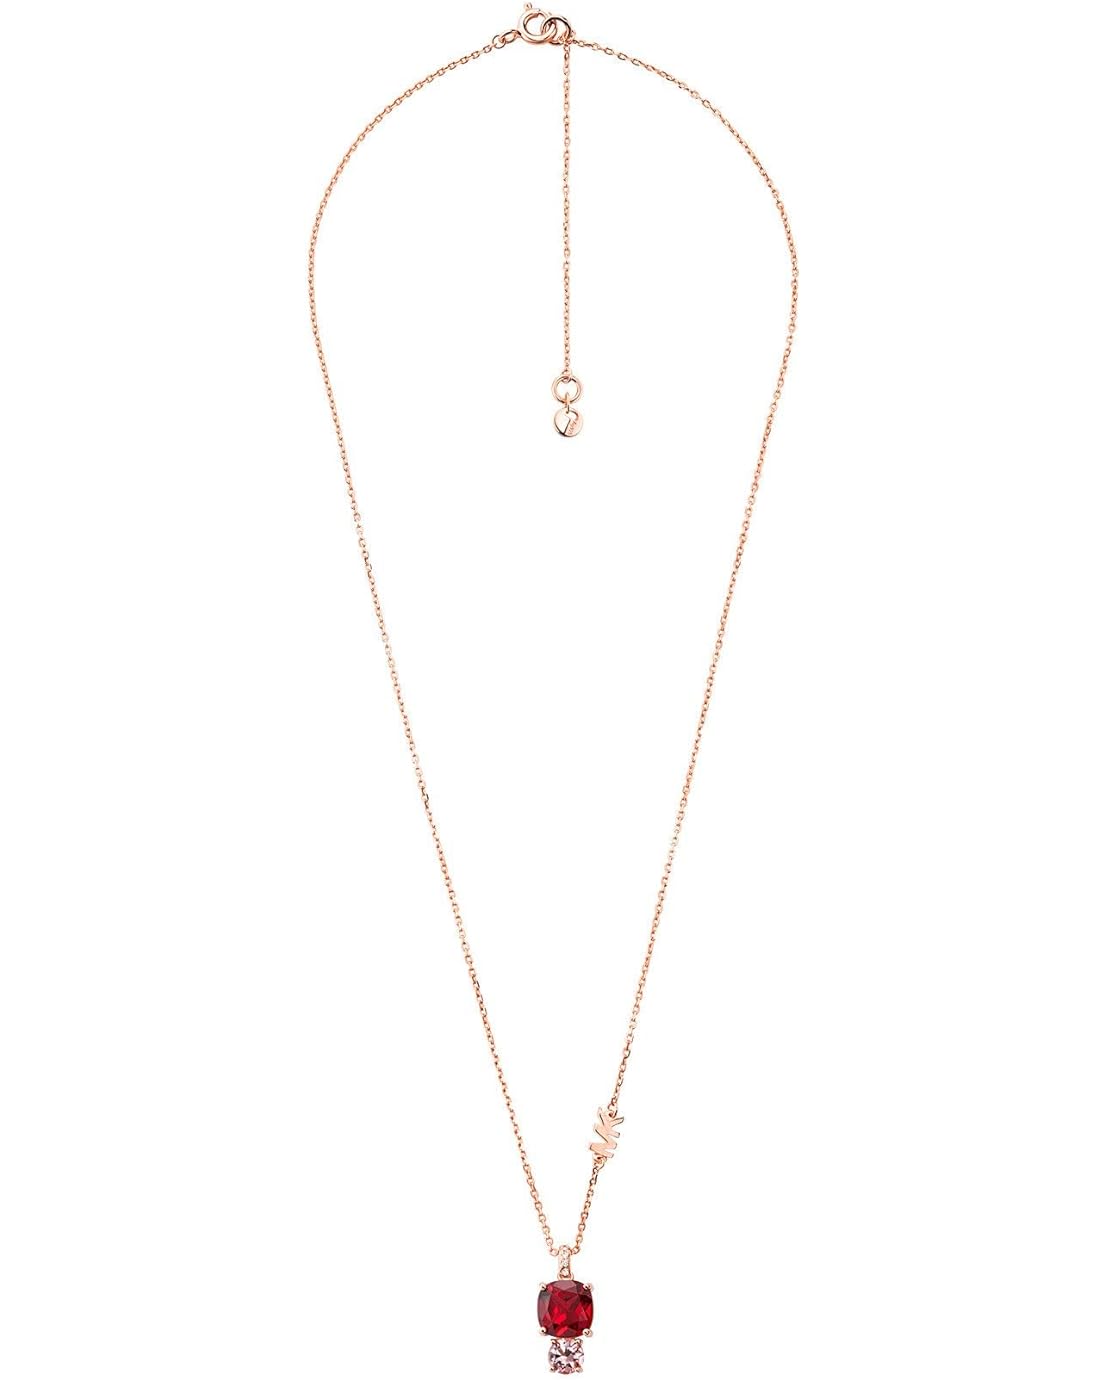 Michael Kors Brilliance Sterling Silver Pendant Necklace